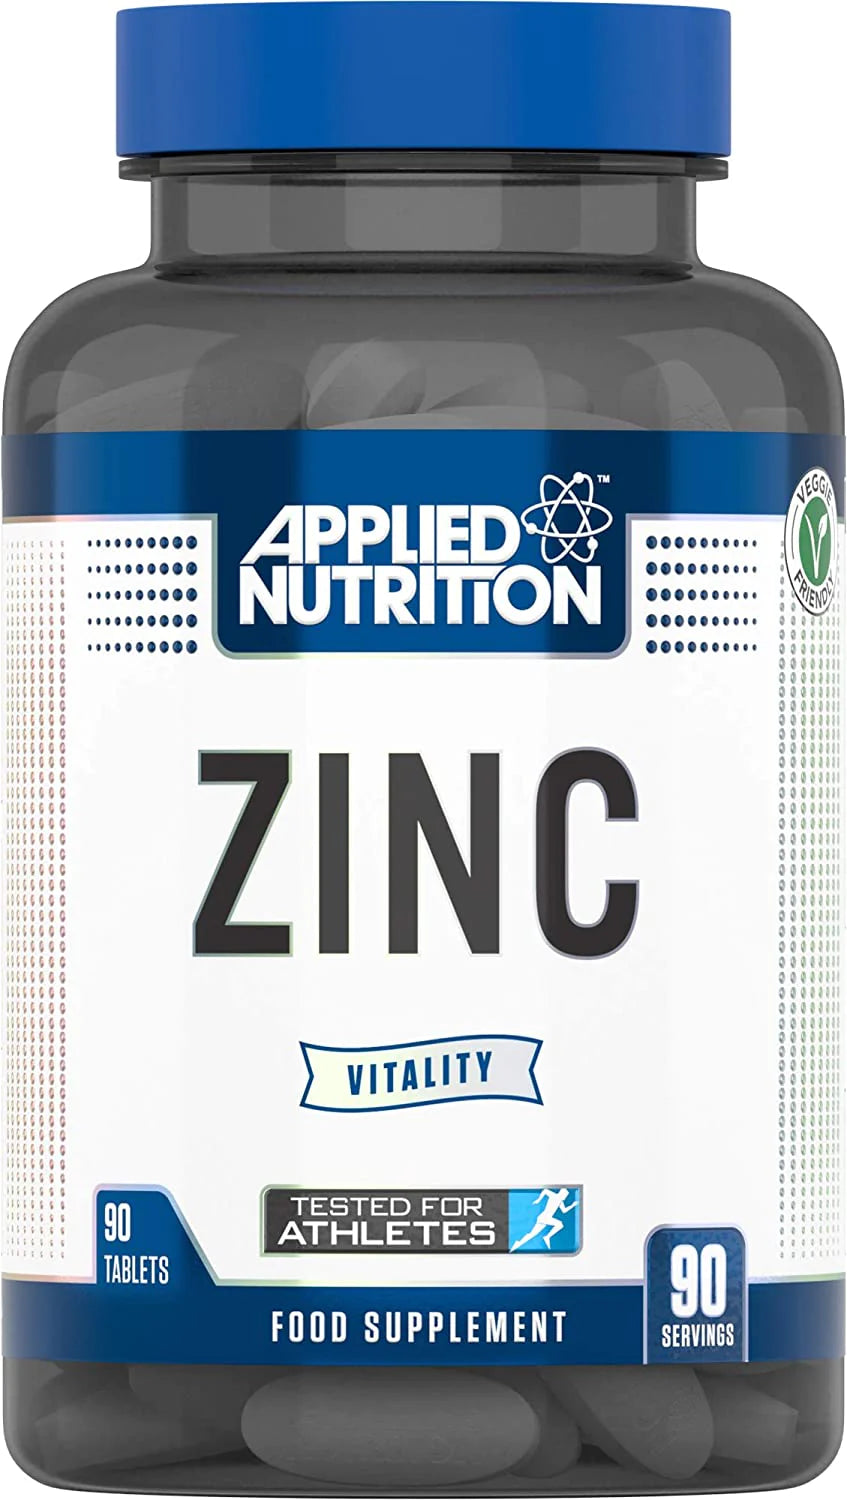 Zinc Tablets - Applied Nutrition